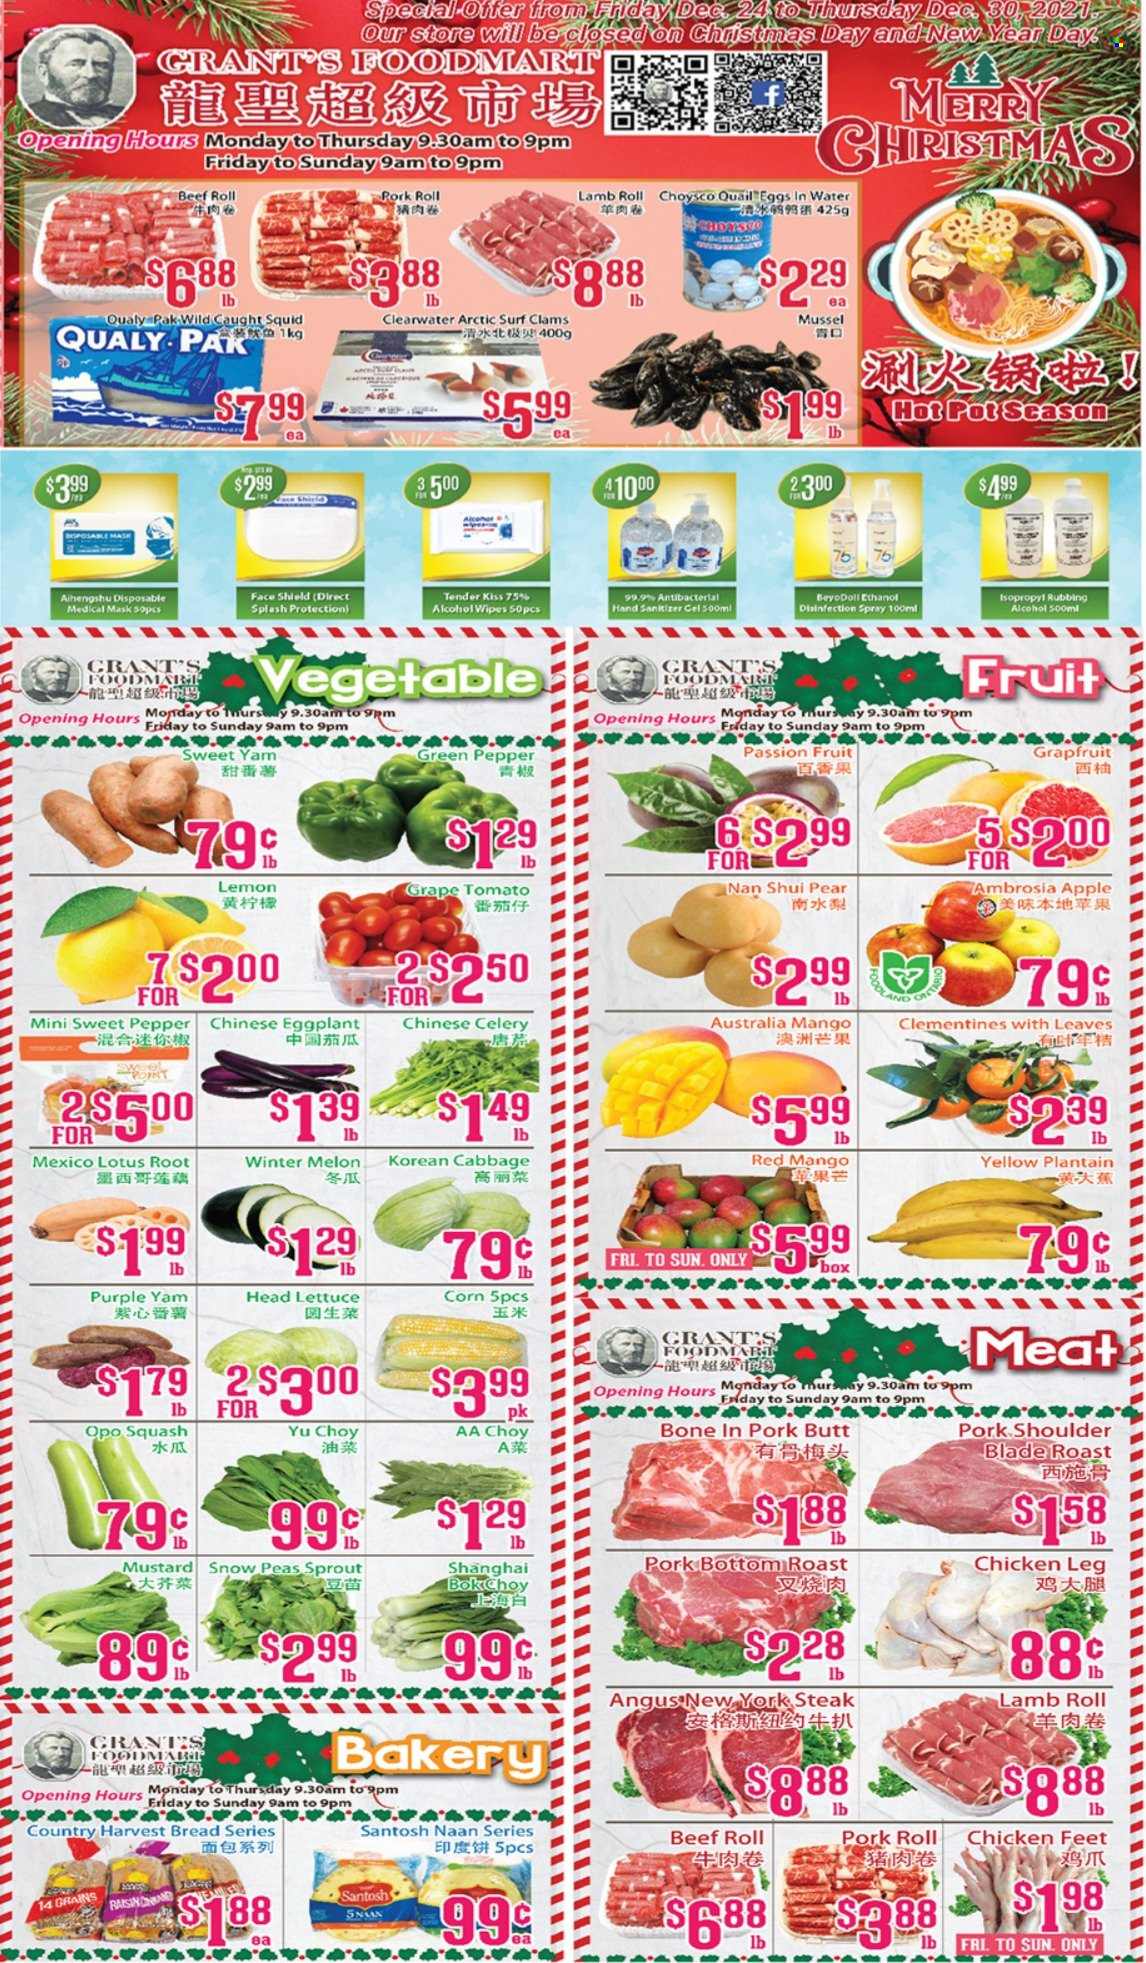 Grant's Foodmart flyer  - December 24, 2021 - December 30, 2021.